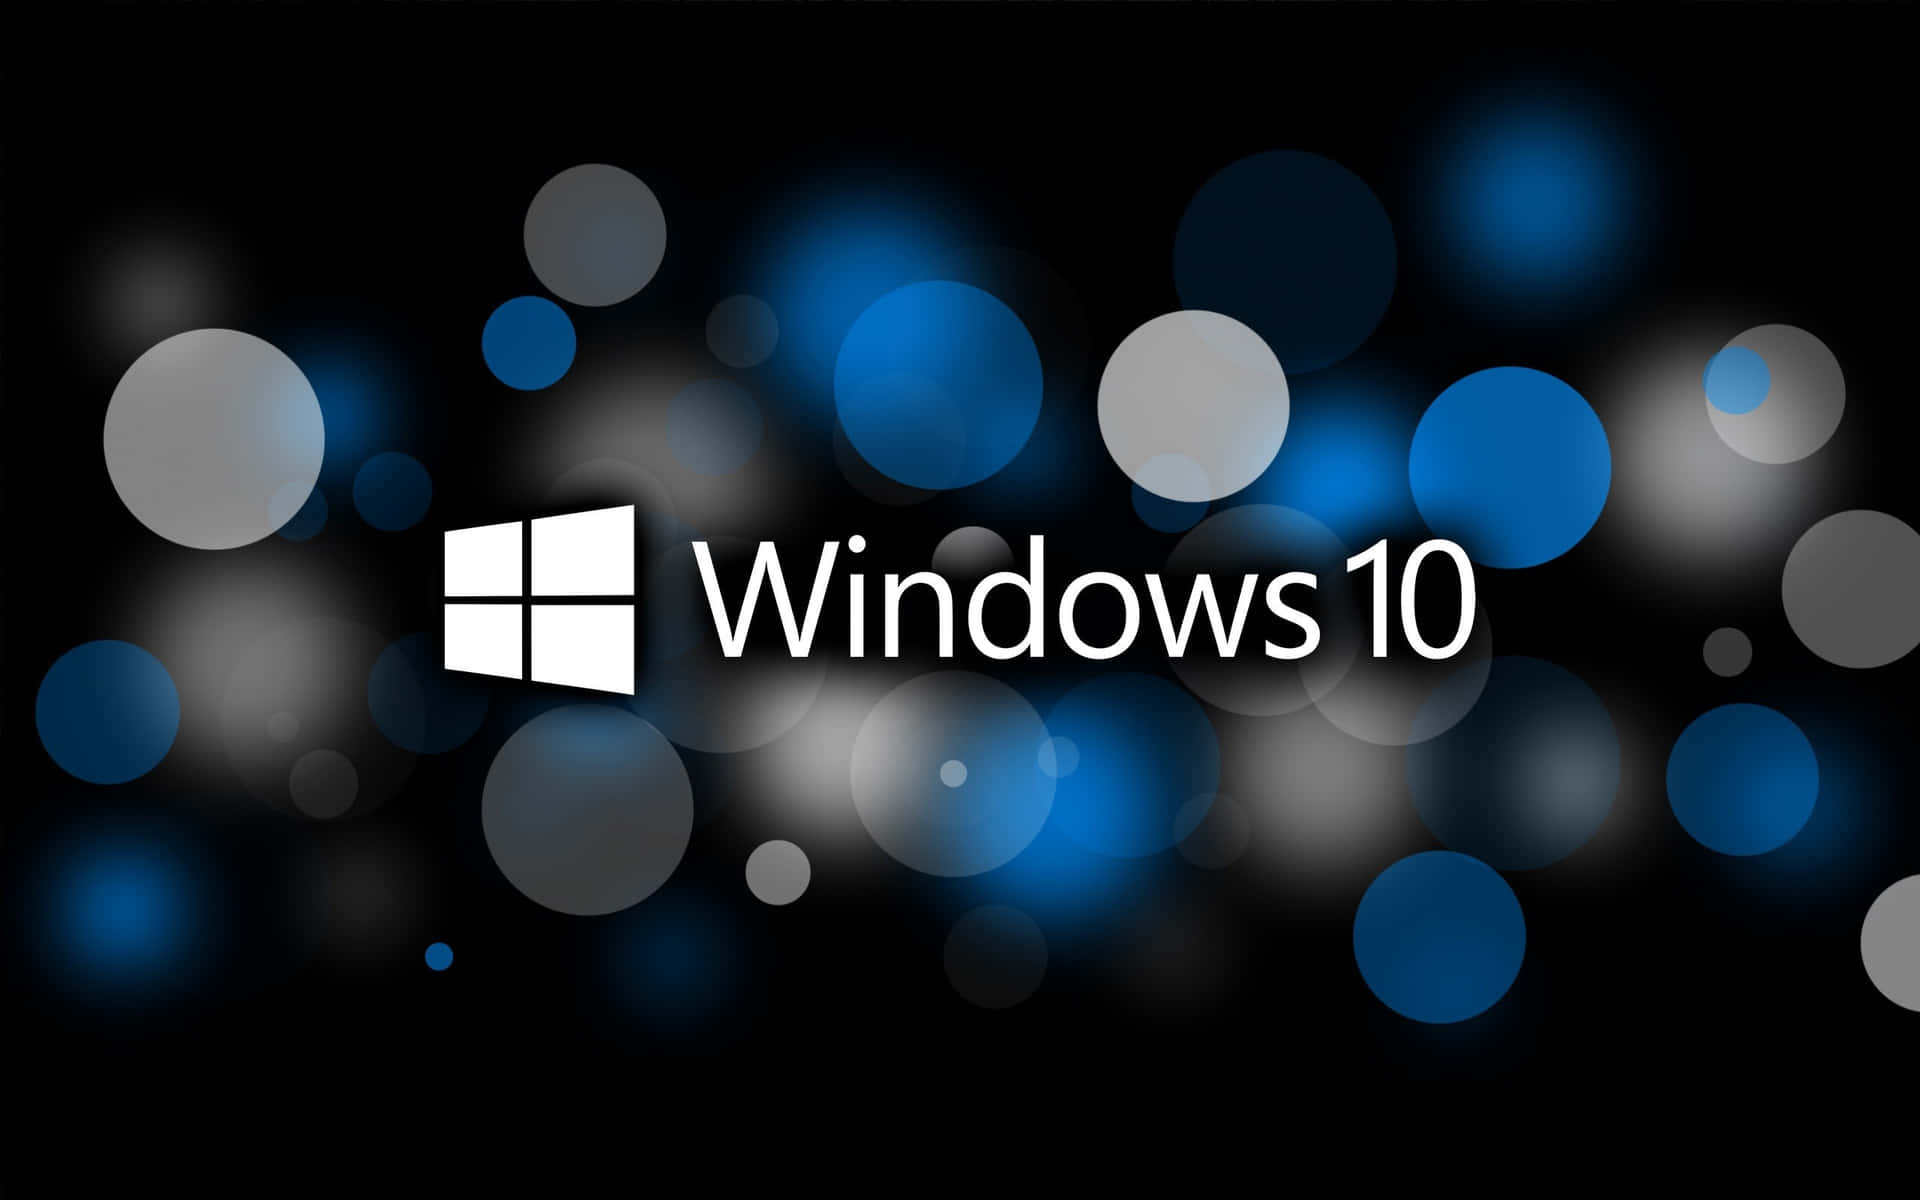 Windows 10 Desktop PC with Microsoft Office Applications